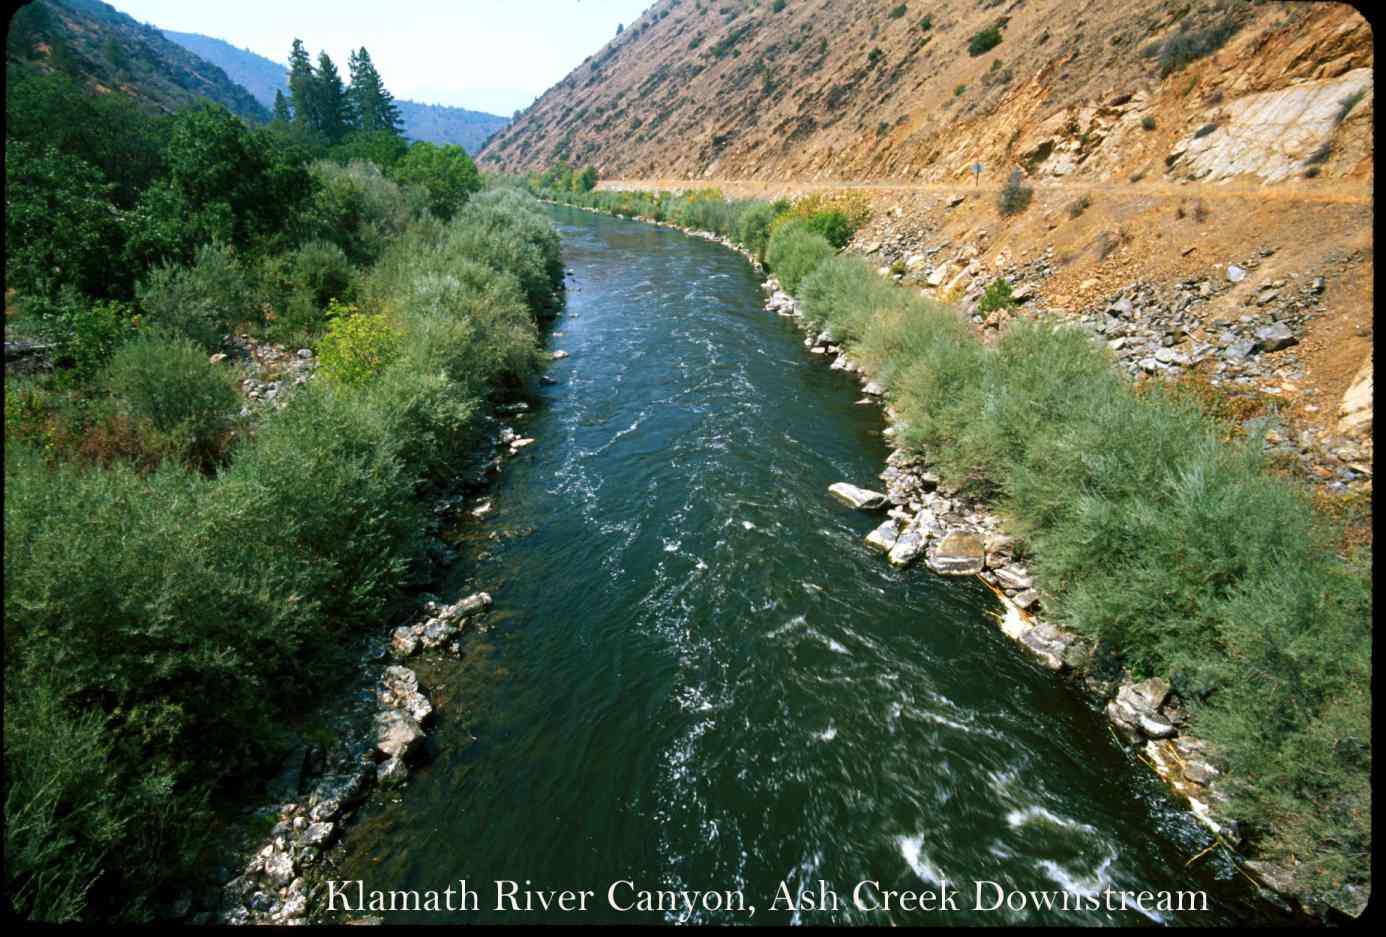 Klamath River below Ash Creek